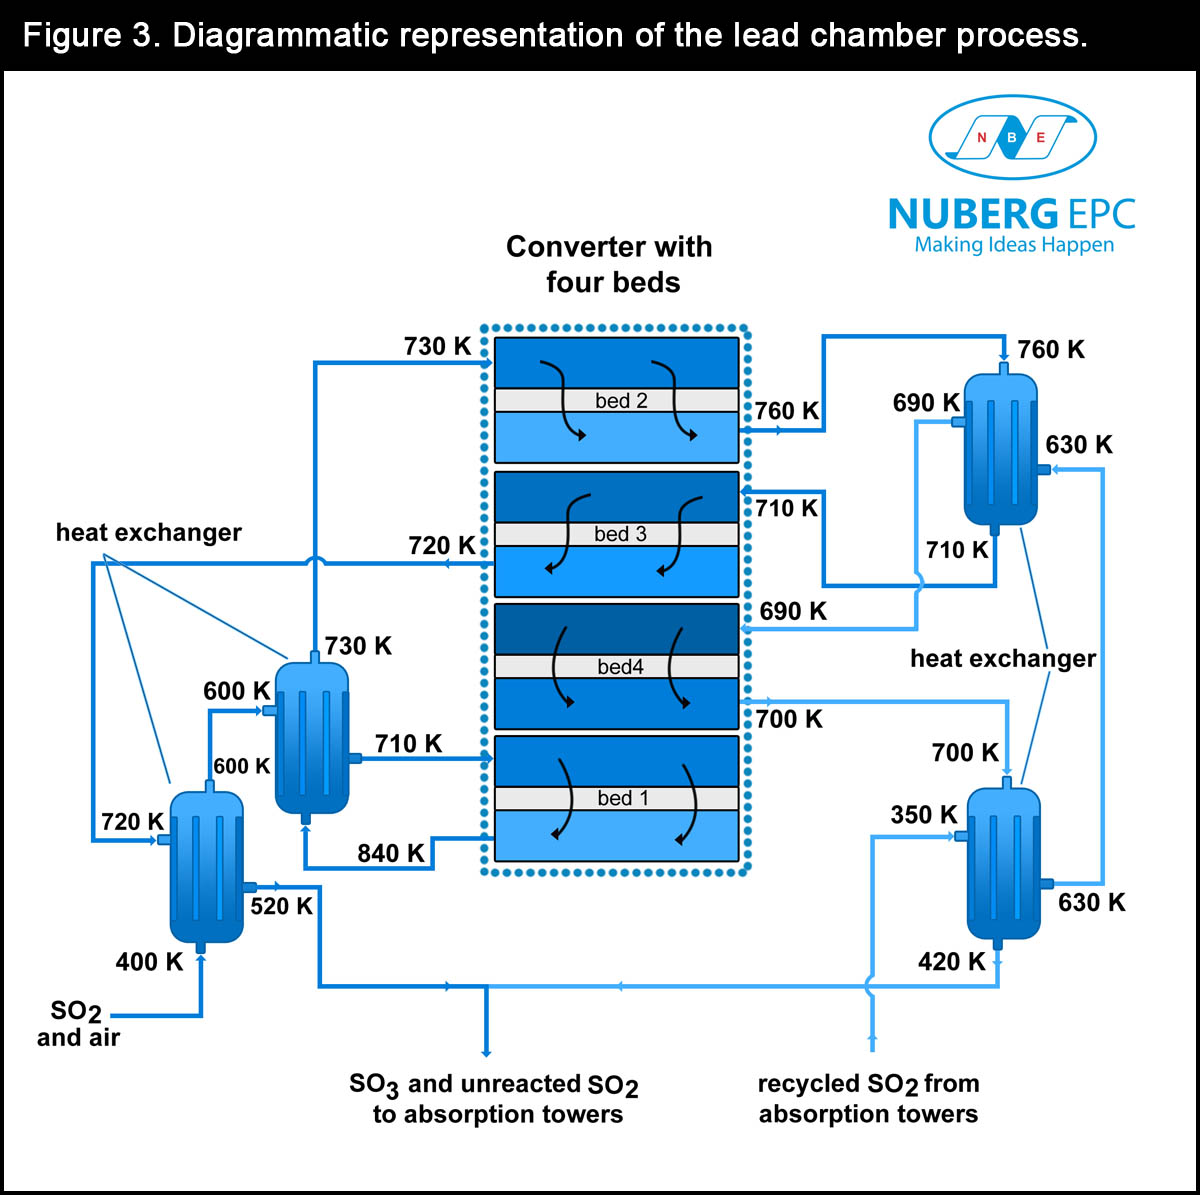 Diagrammatic representation of the lead chamber process